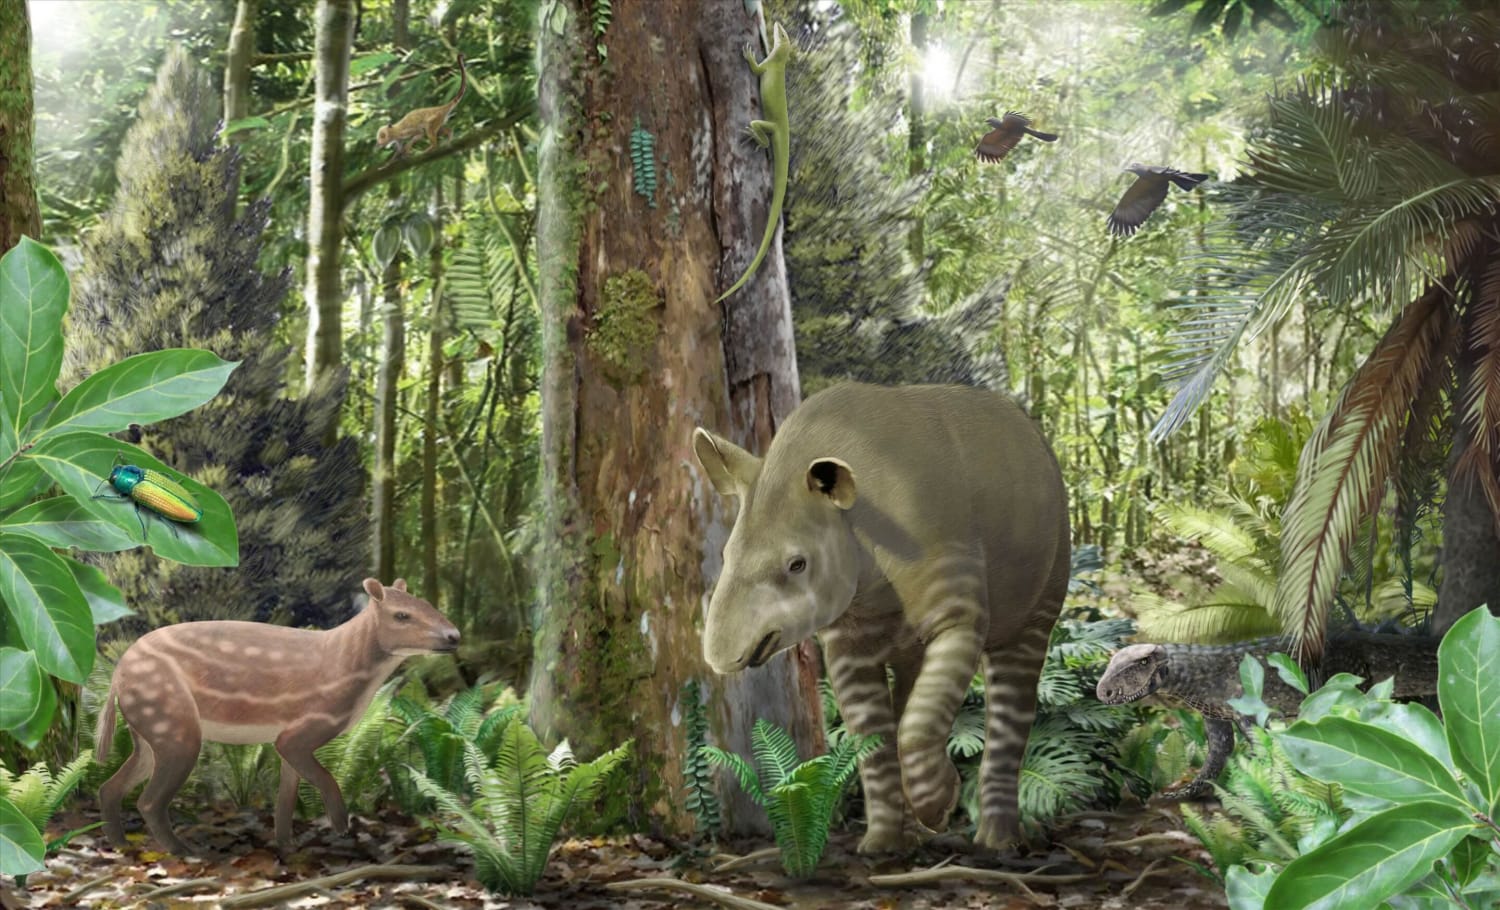 Small horses got smaller, big tapirs got bigger 47 million years ago